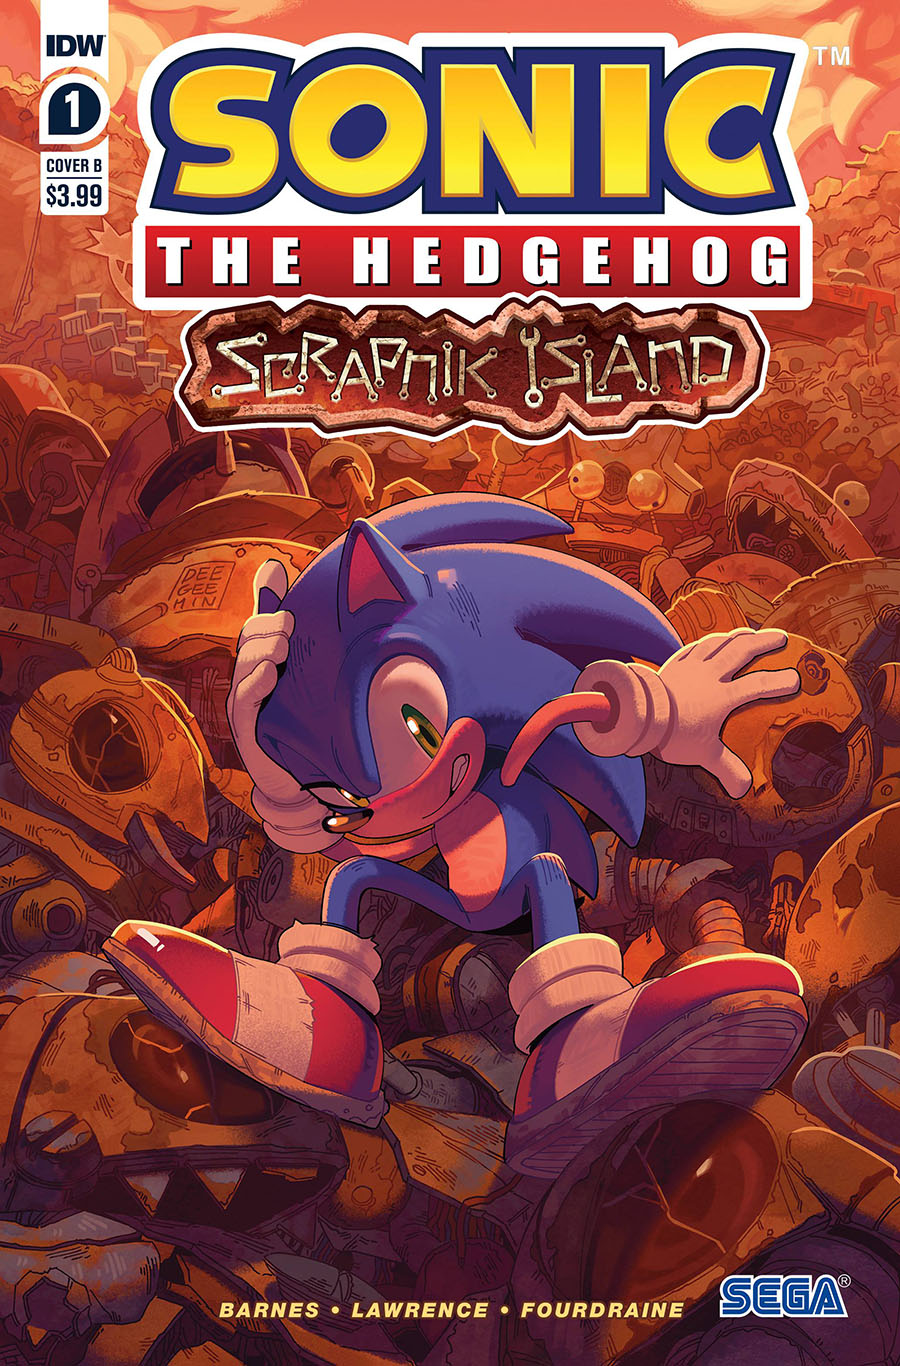 Sonic The Hedgehog Scrapnik Island #1 Cover B Variant Min Ho Kim Cover